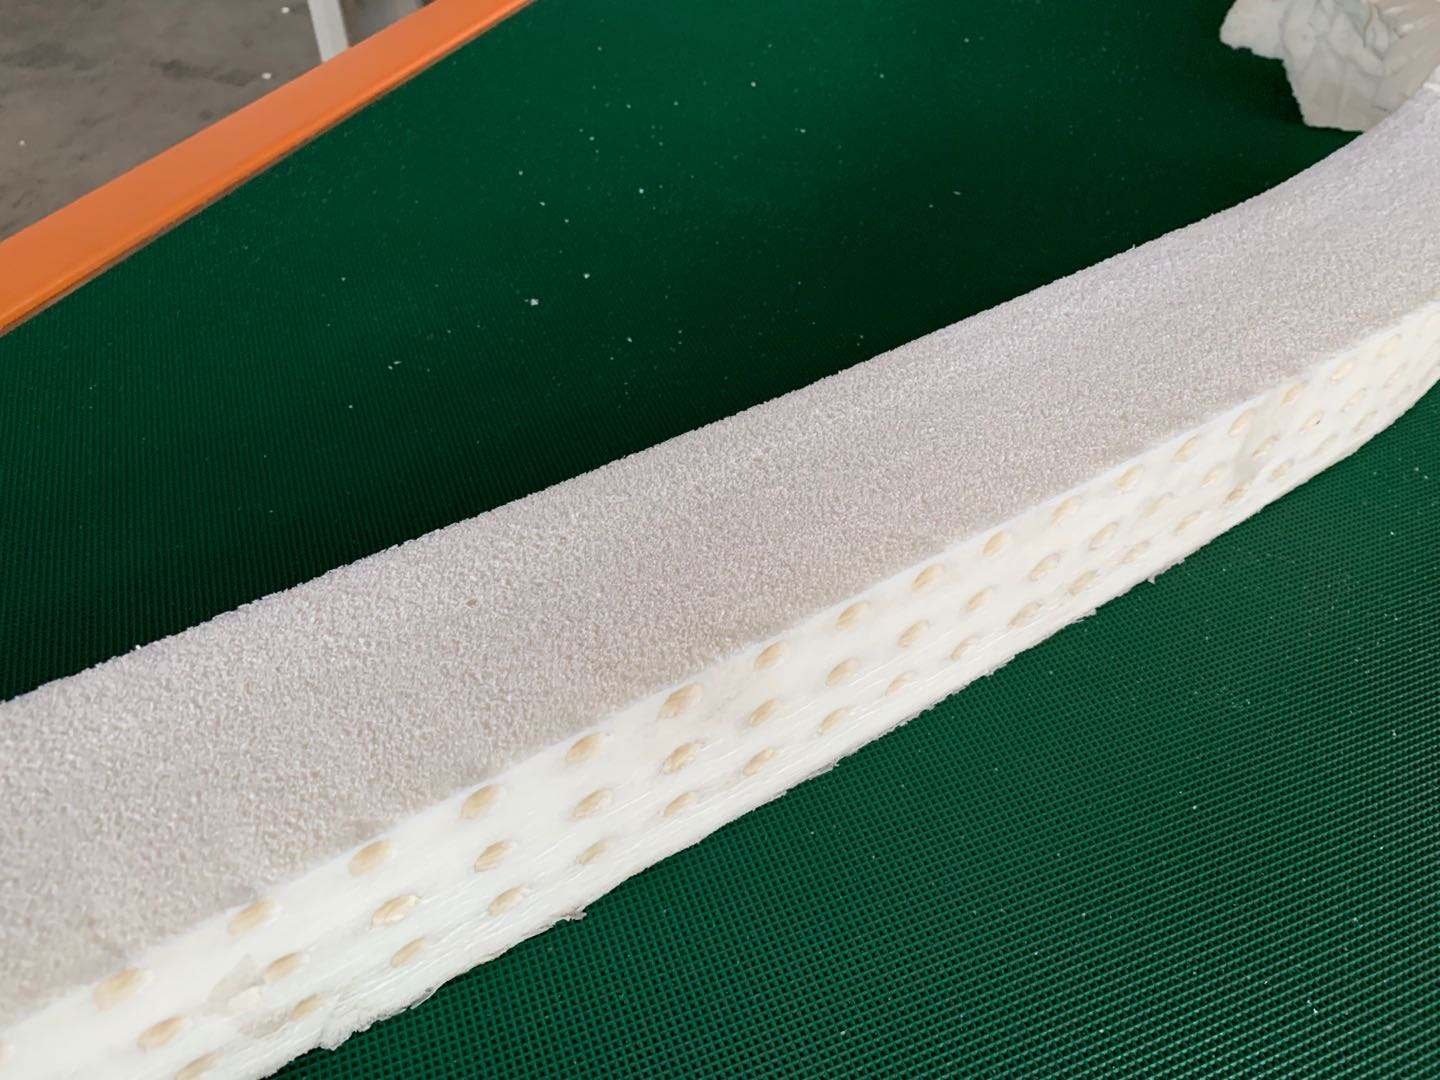 PU Foam Cutter Automatically Cutting Equipment Machine Latex foam Saw with both Horizontal and Vertical